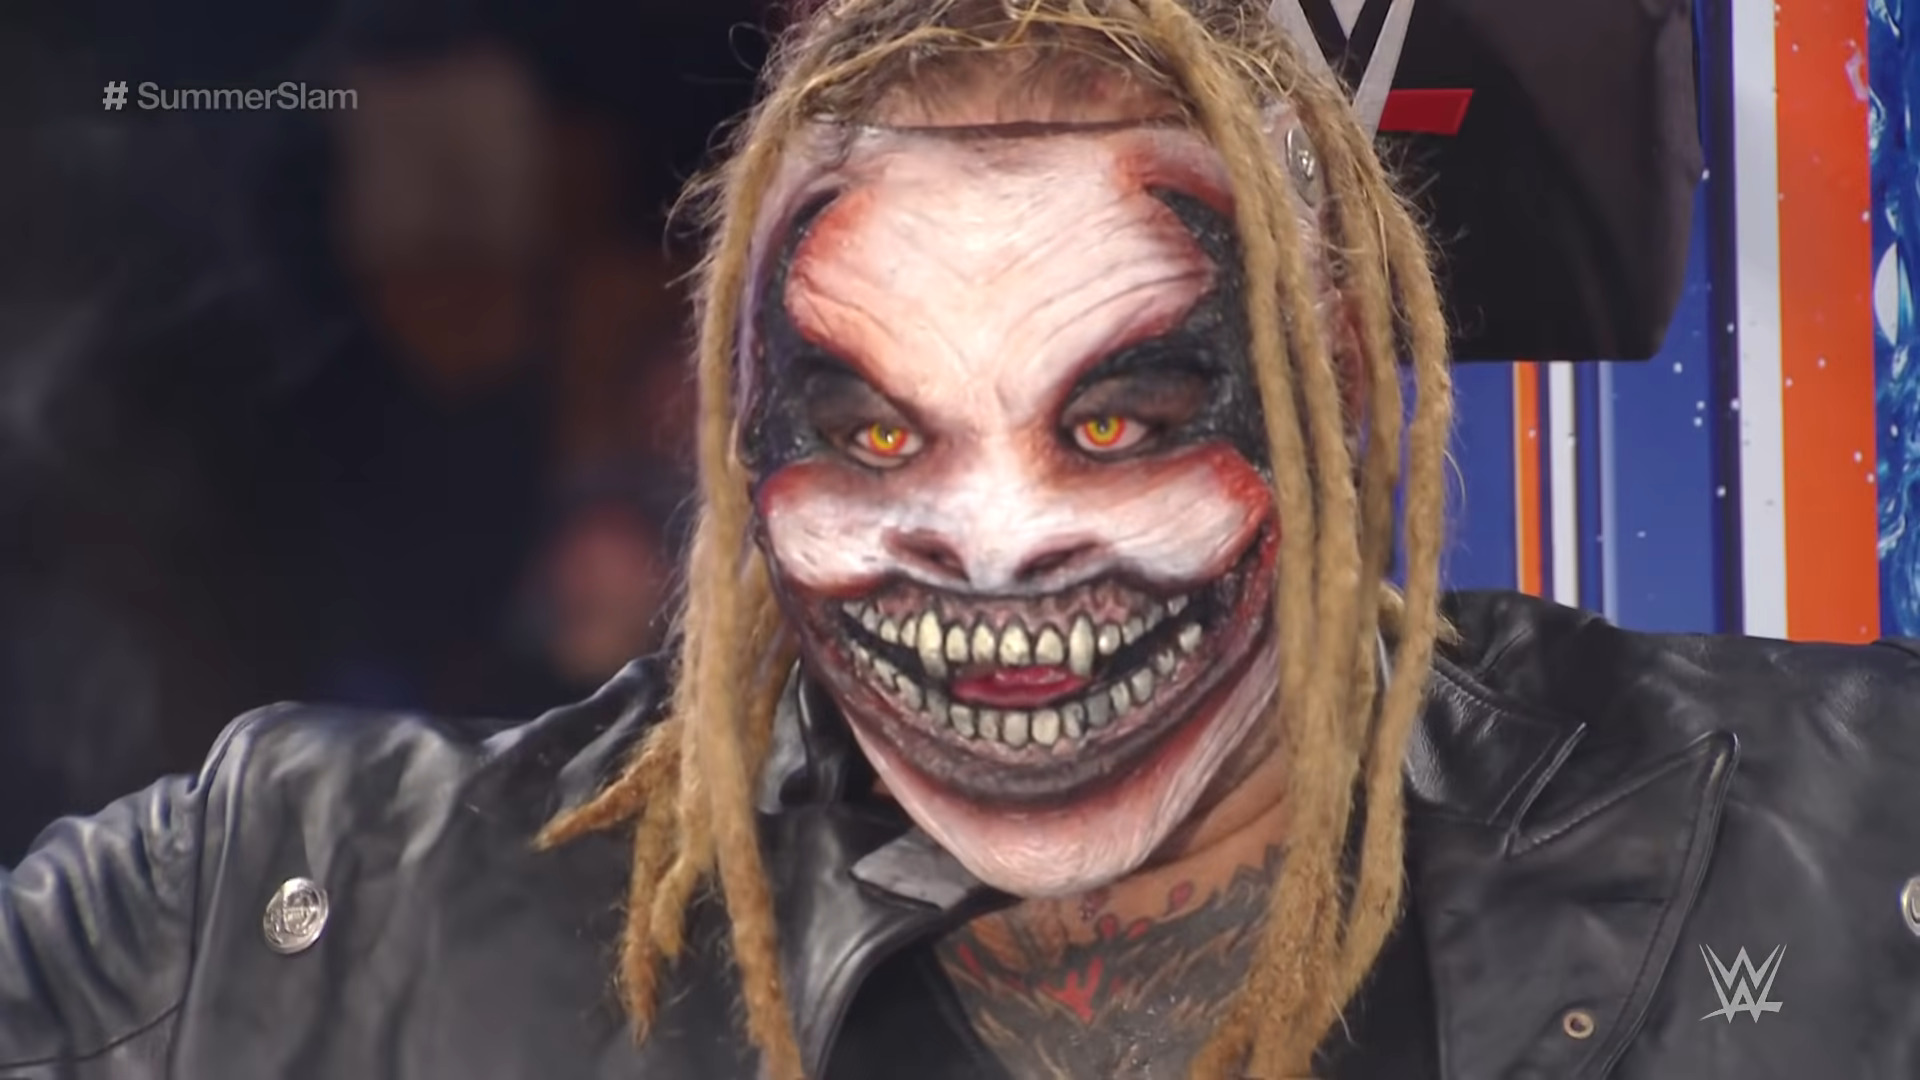 Bray Wyatt debuts as The Fiend at SummerSlam 2019